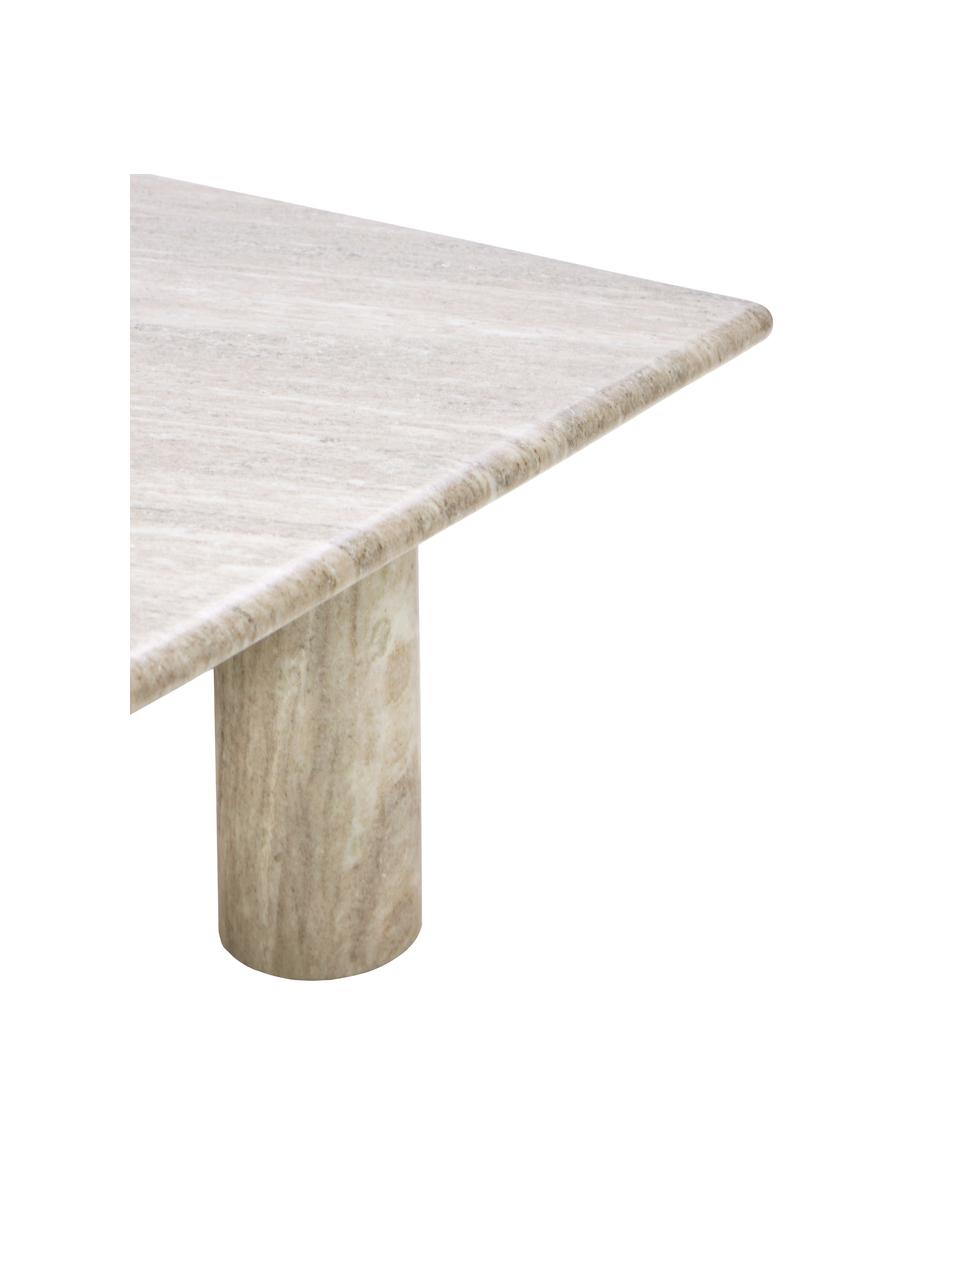 Table basse marbre Mabel, carrée, Travertin, larg. 80 x haut. 35 cm